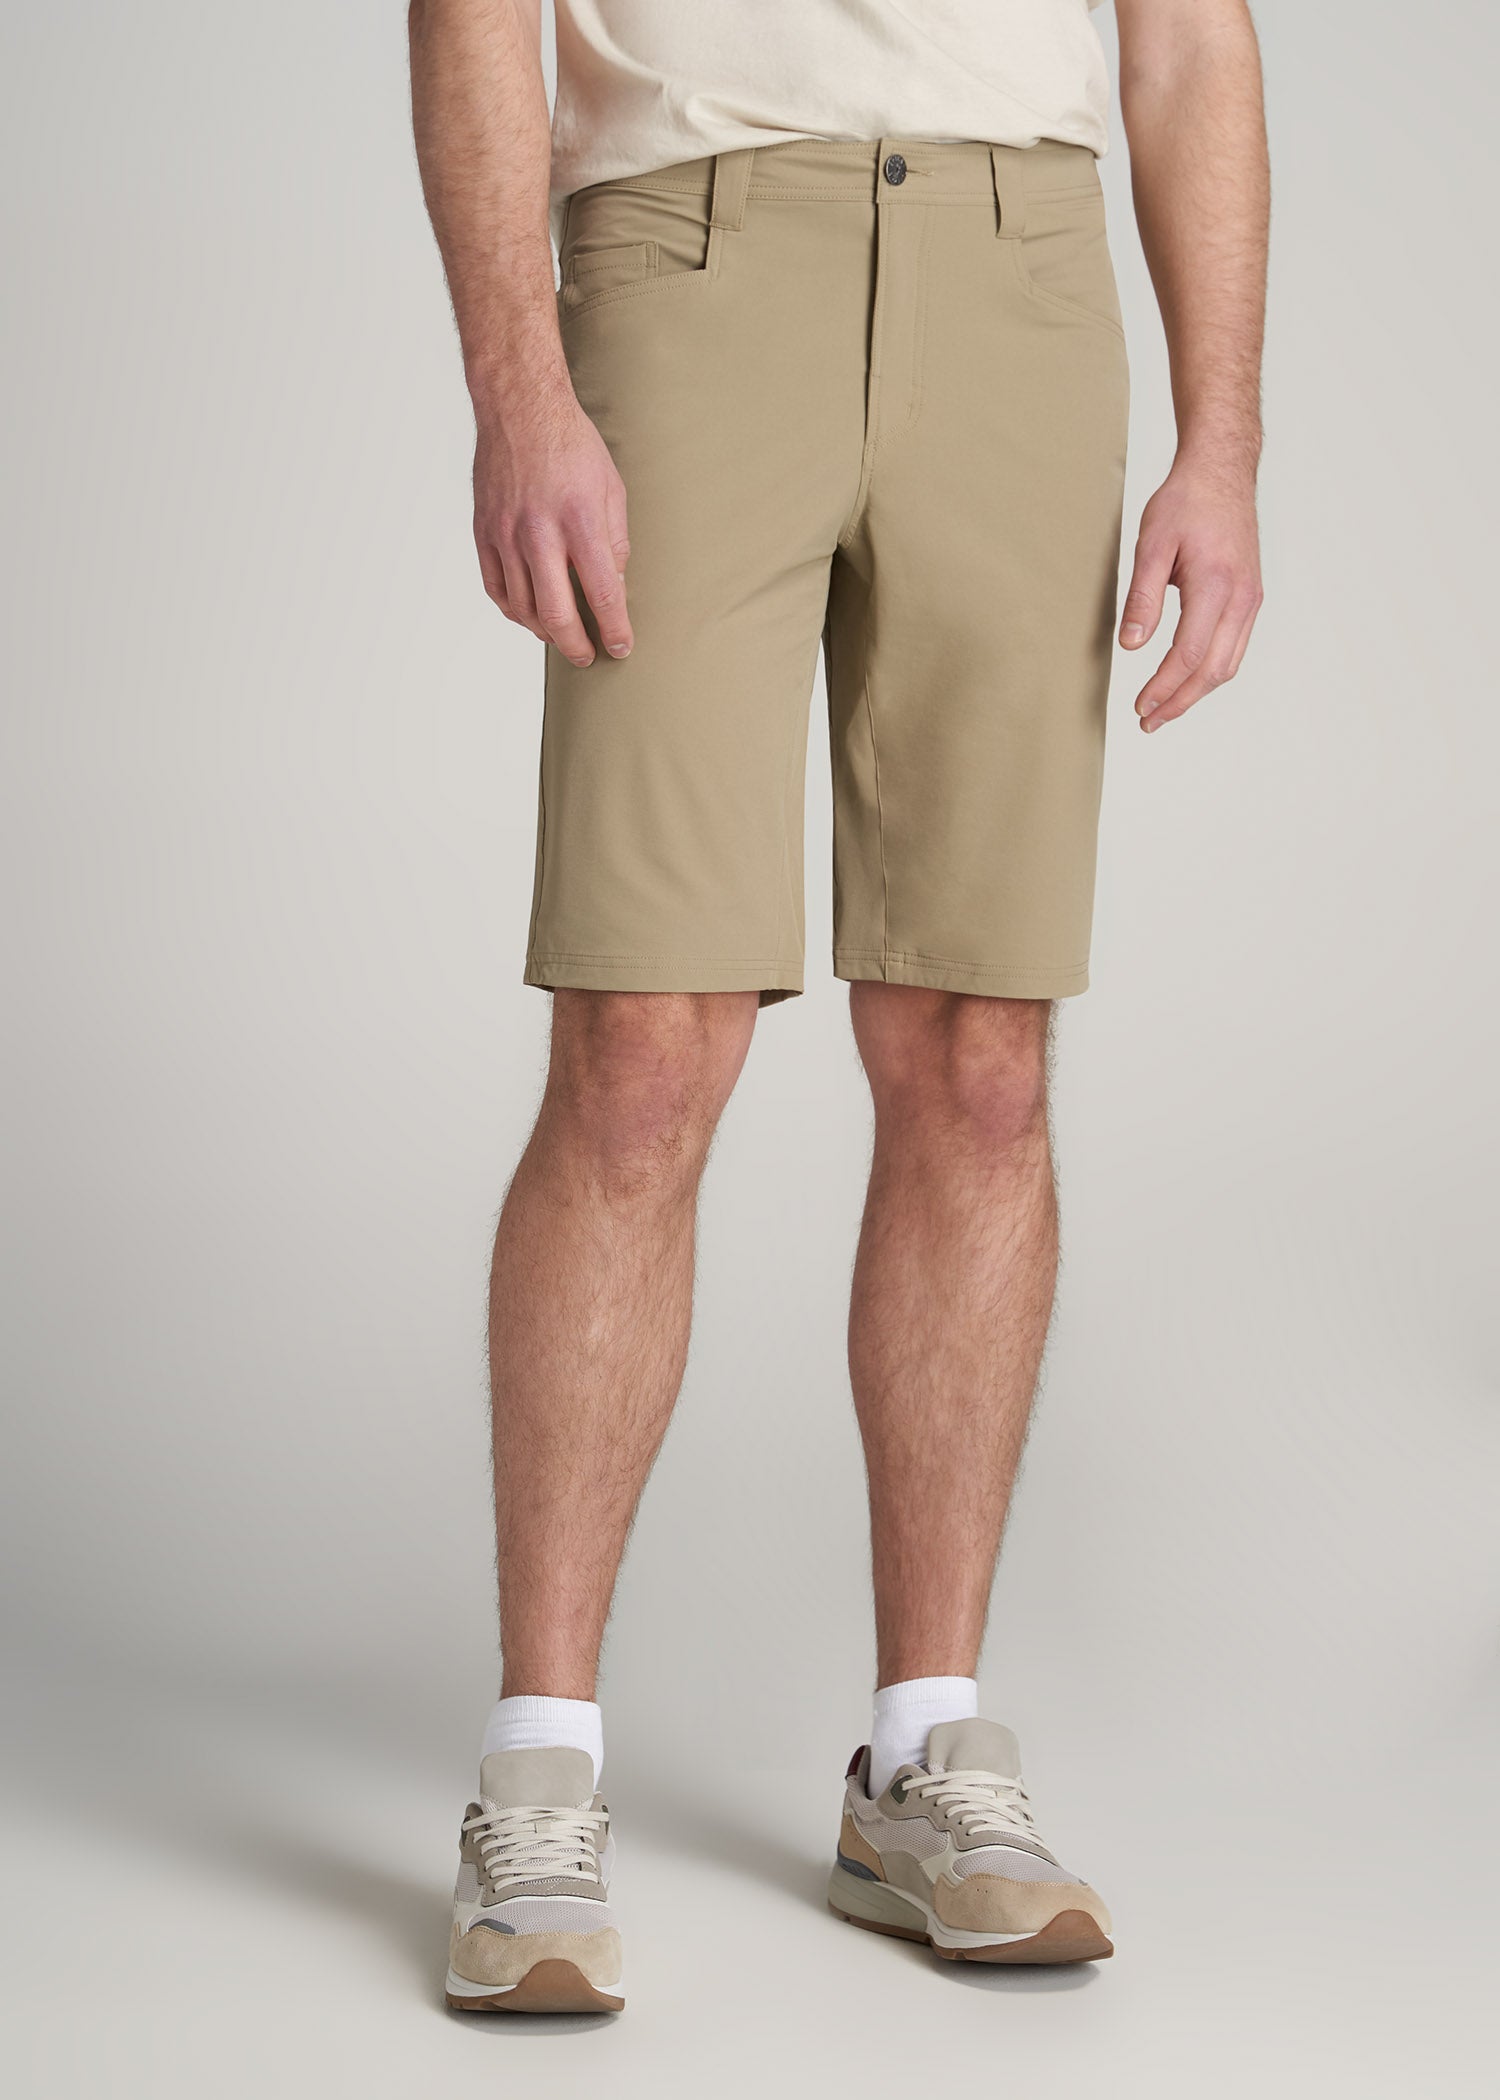 Tall Men's Hiking Shorts: Tan Hiking Shorts for Men